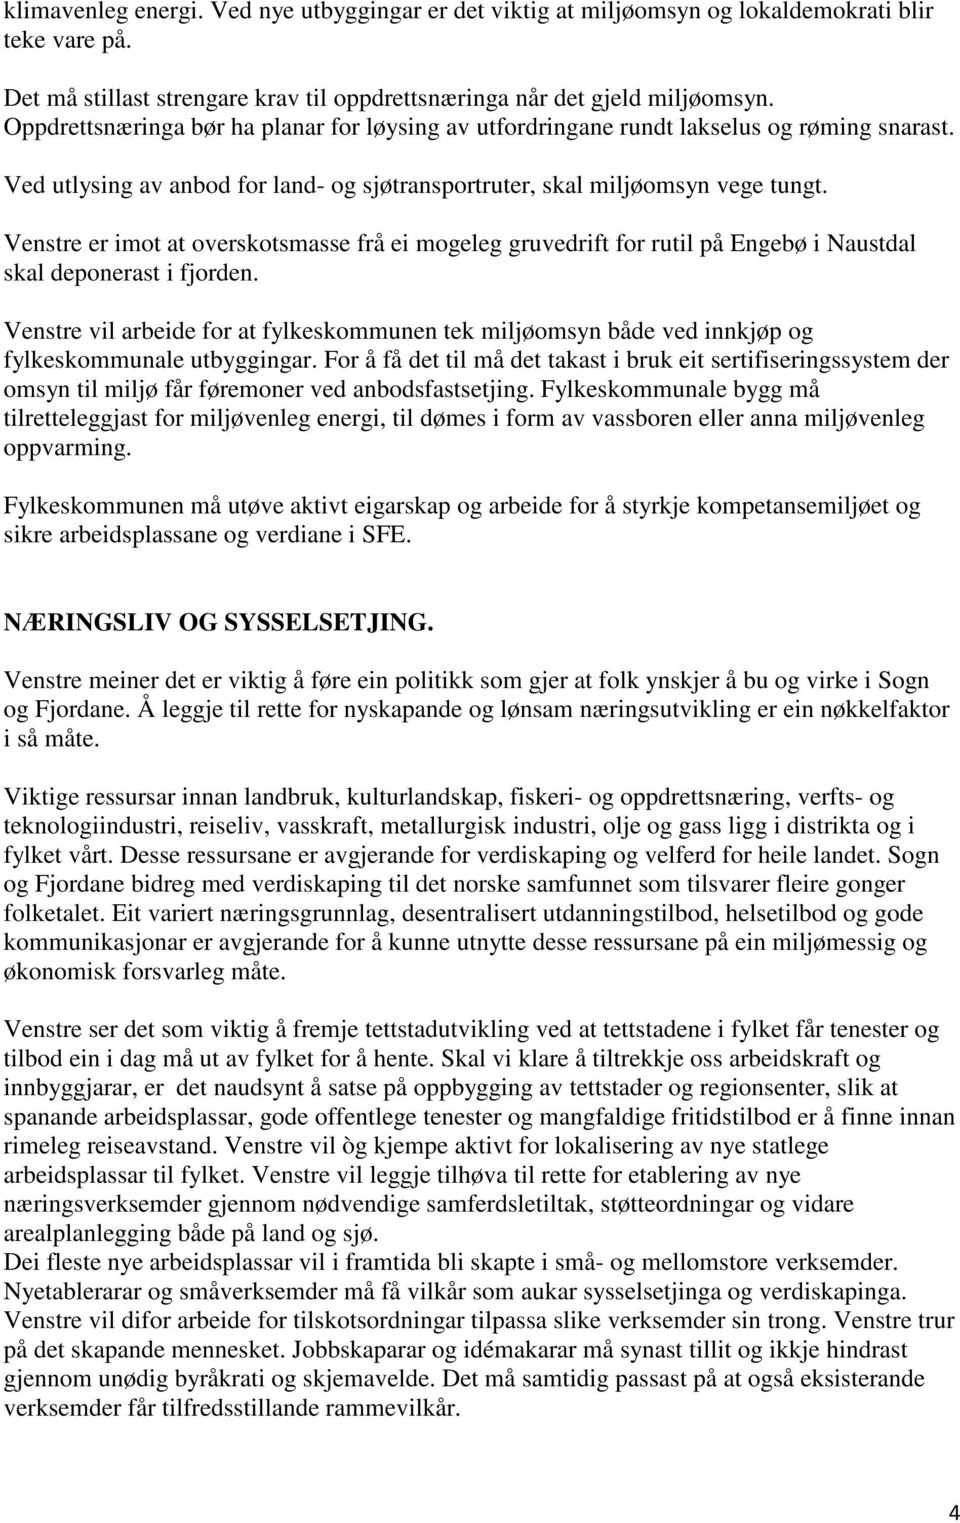 Venstre er imot at overskotsmasse frå ei mogeleg gruvedrift for rutil på Engebø i Naustdal skal deponerast i fjorden.